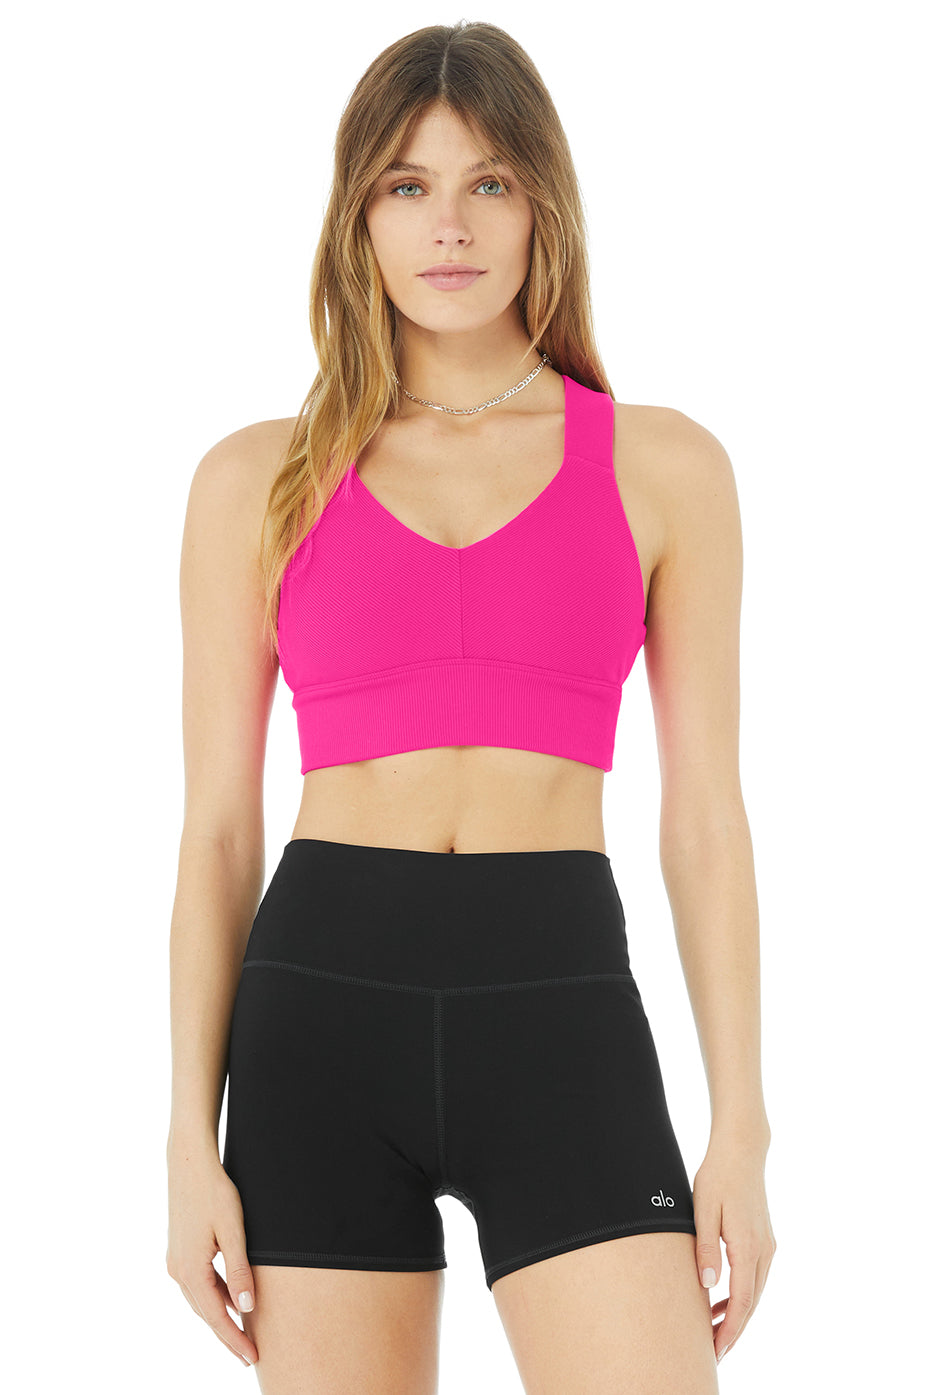 Alo Yoga Ambient Logo Sport Bra. Pink. Size M. NWT